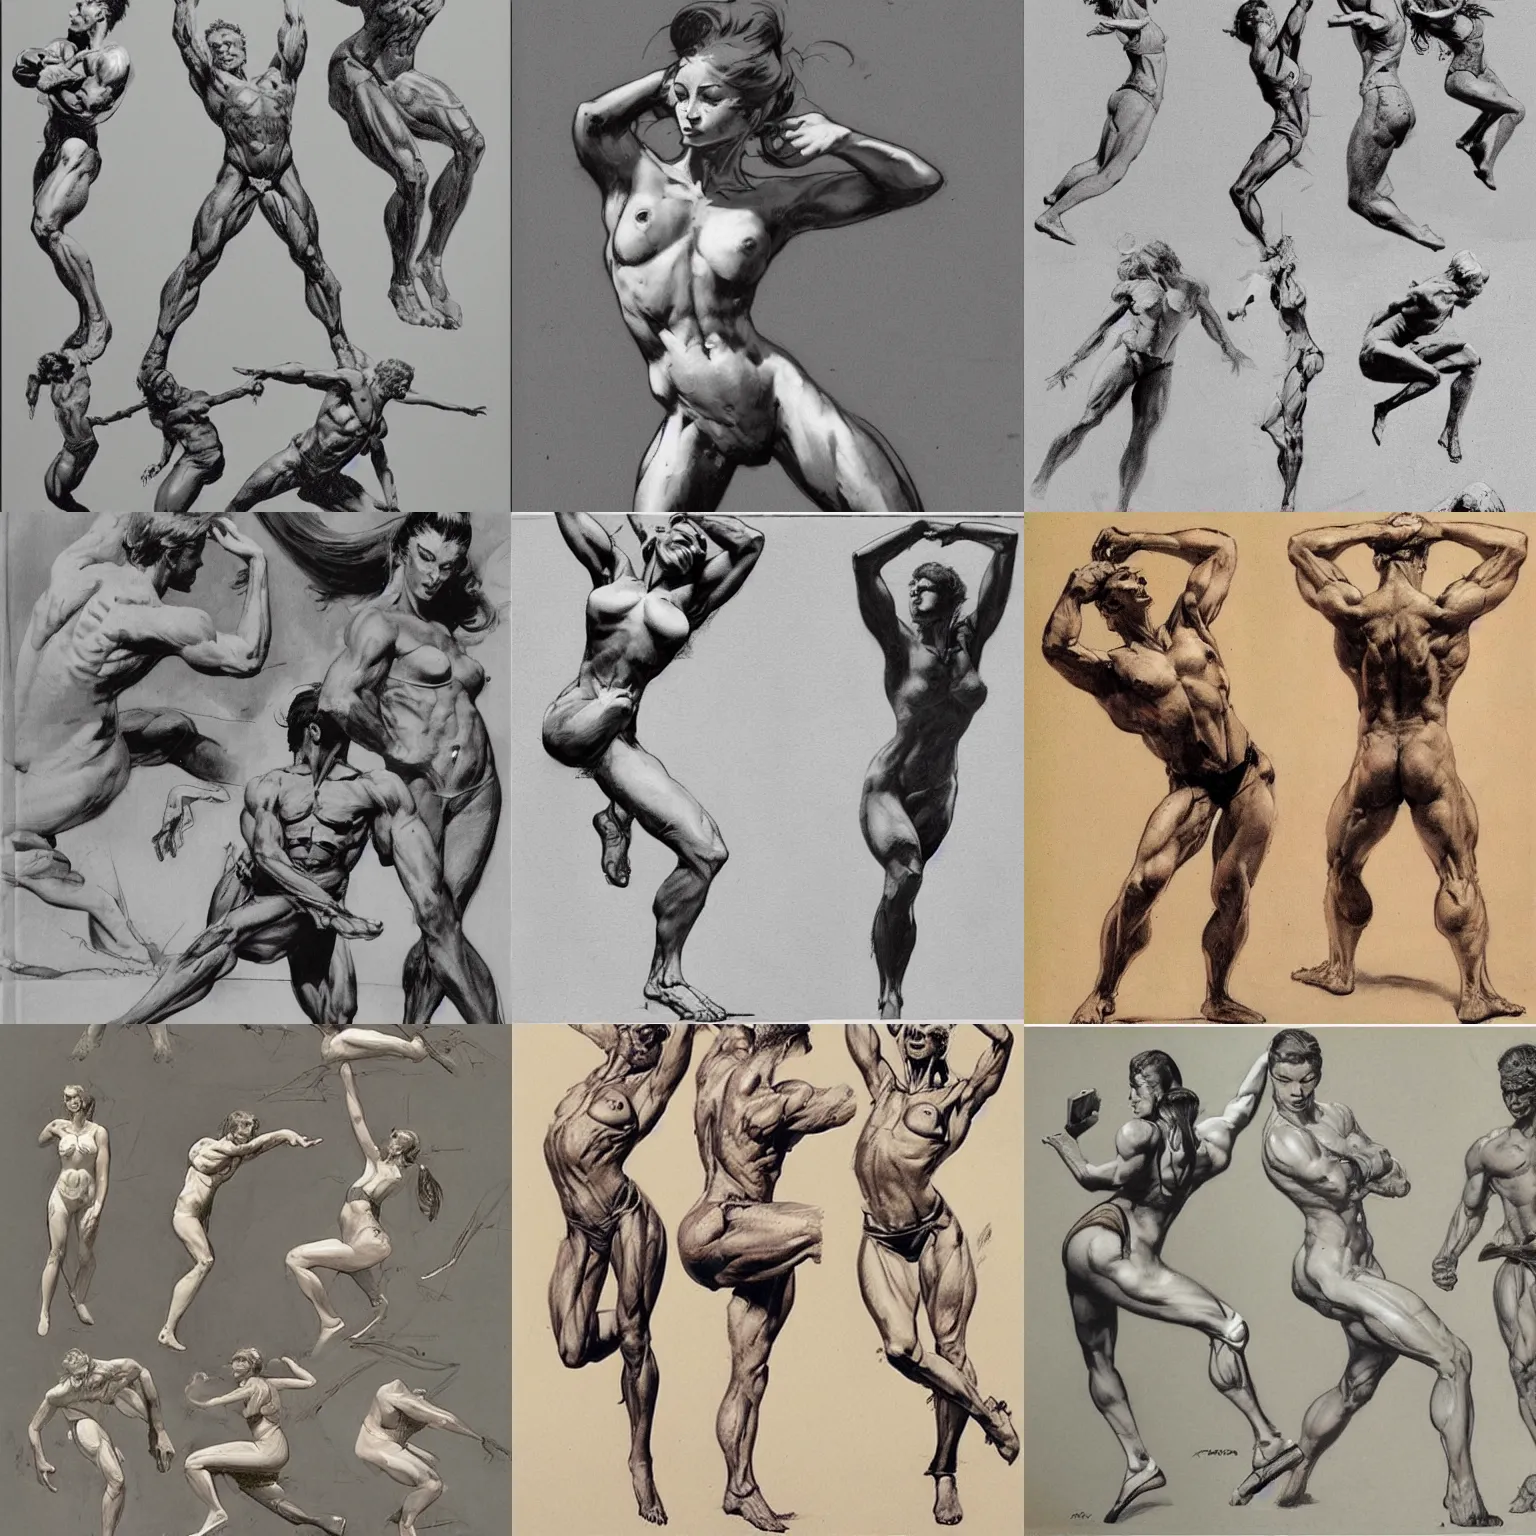 Prompt: anatomy study in dynamic poses by frank frazetta